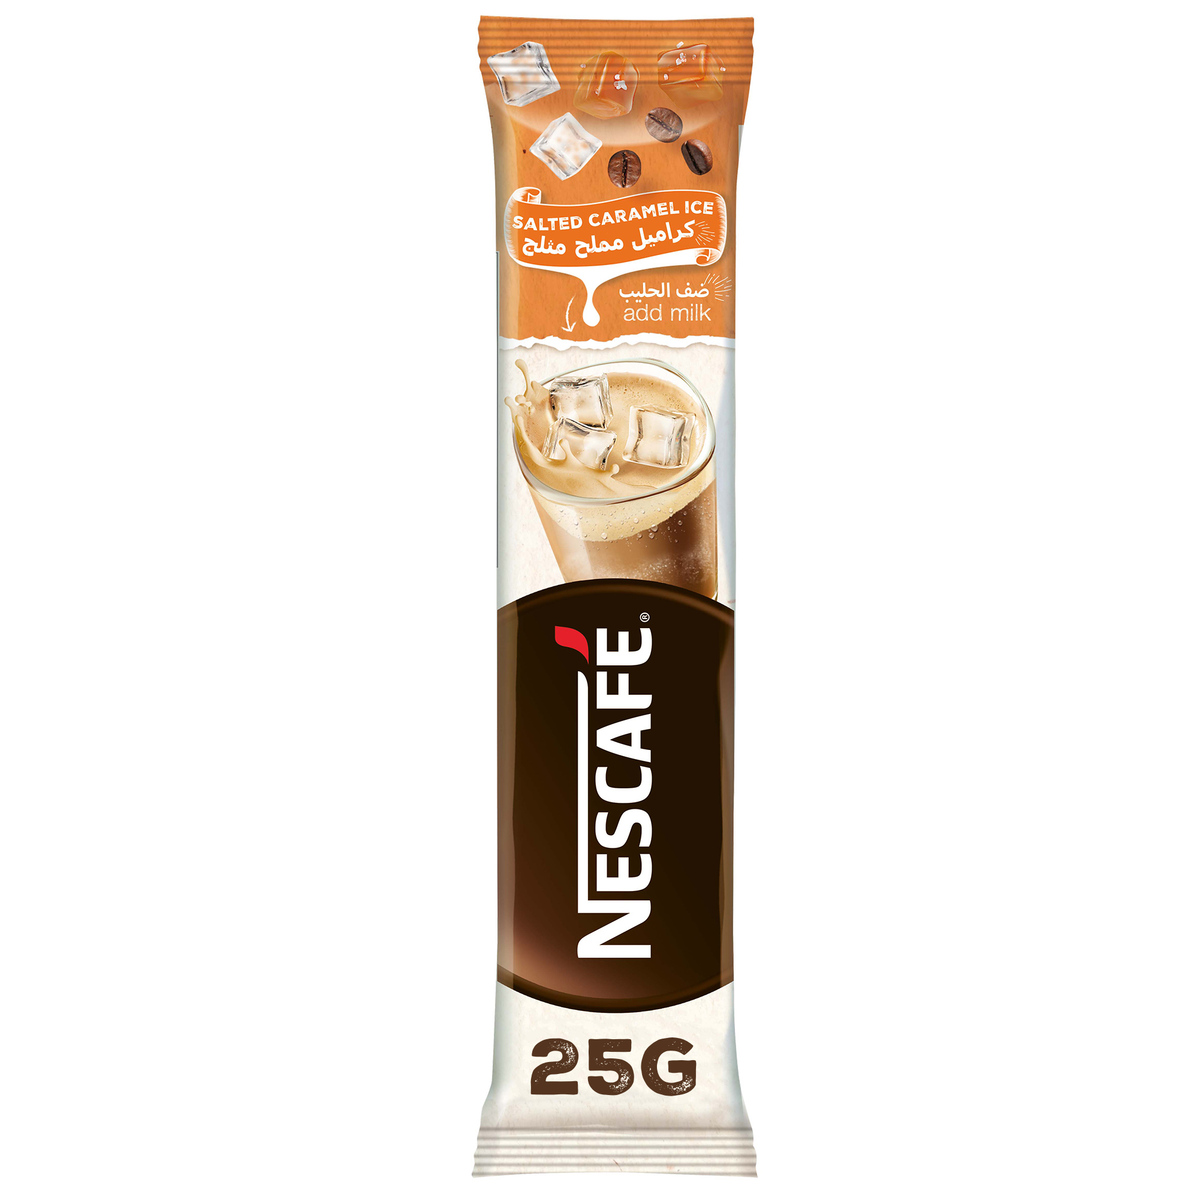 Nescafe Salted Caramel Ice 10 x 25 g